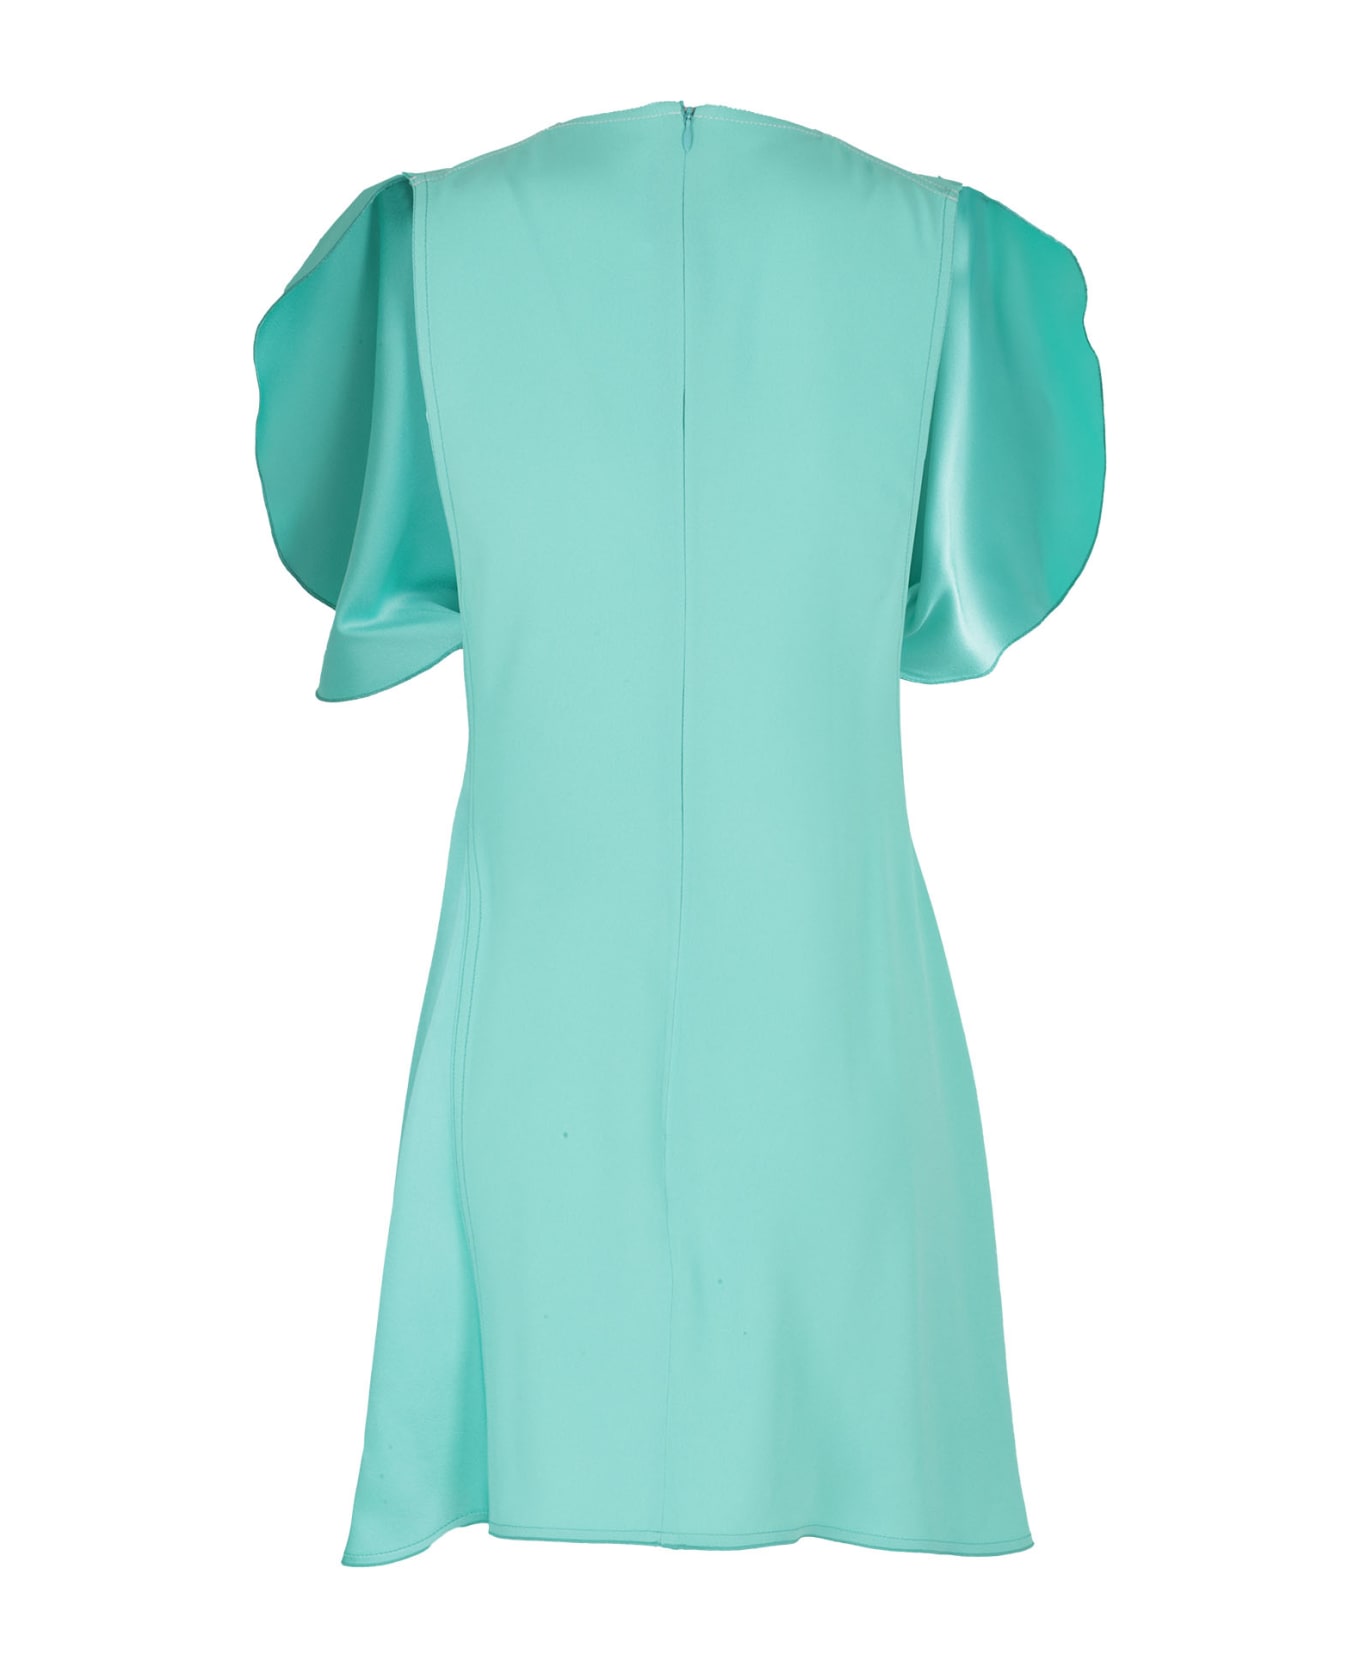 Victoria Beckham Cap Sleeve - Turquoise